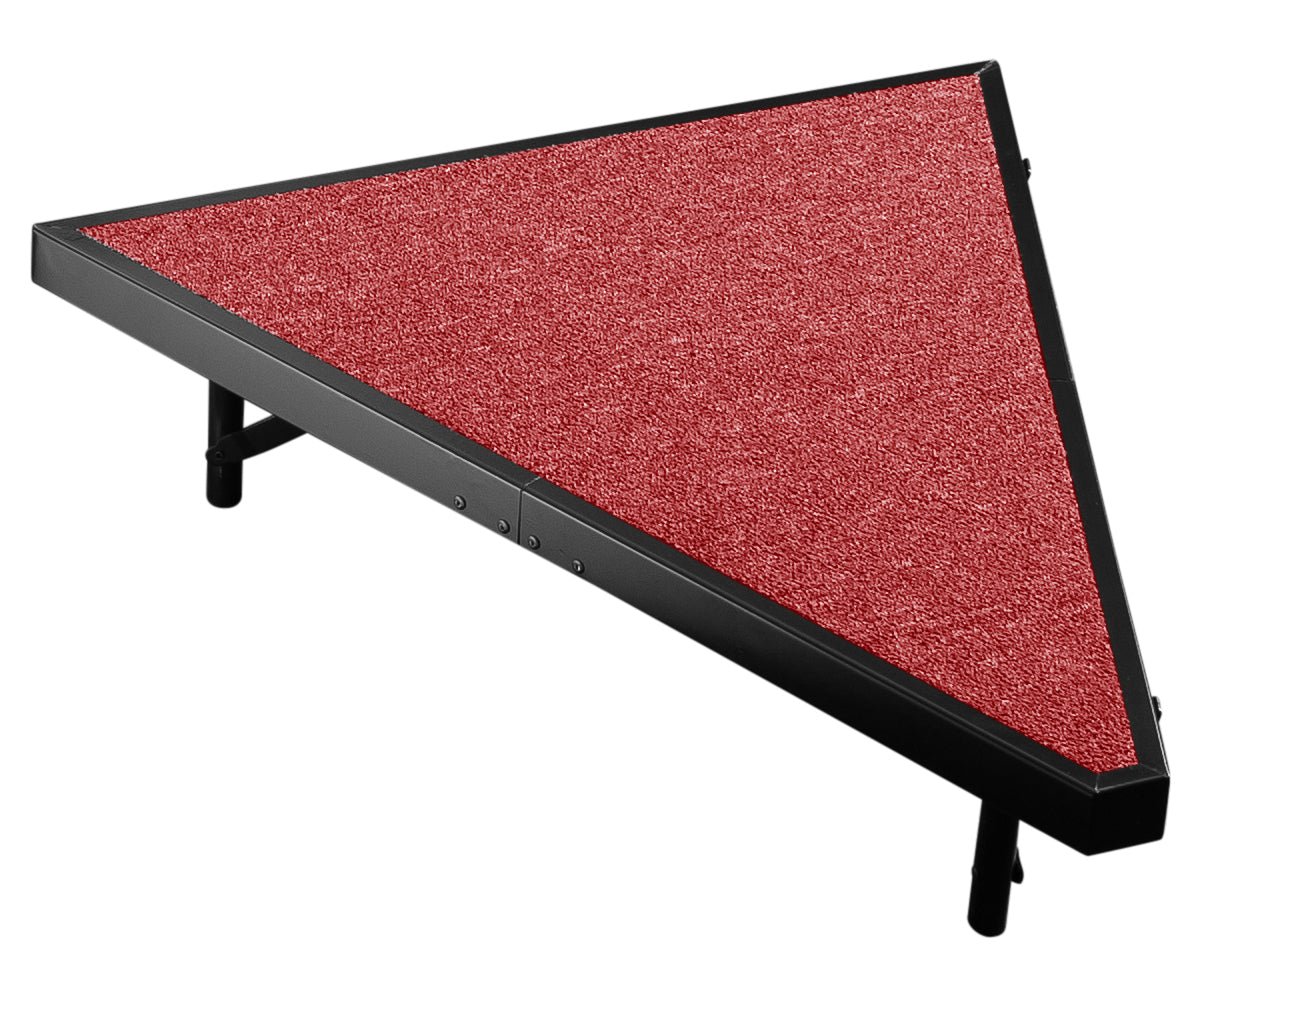 NPS Portable Stage Unit - Carpeted or Hardboard - SchoolOutlet